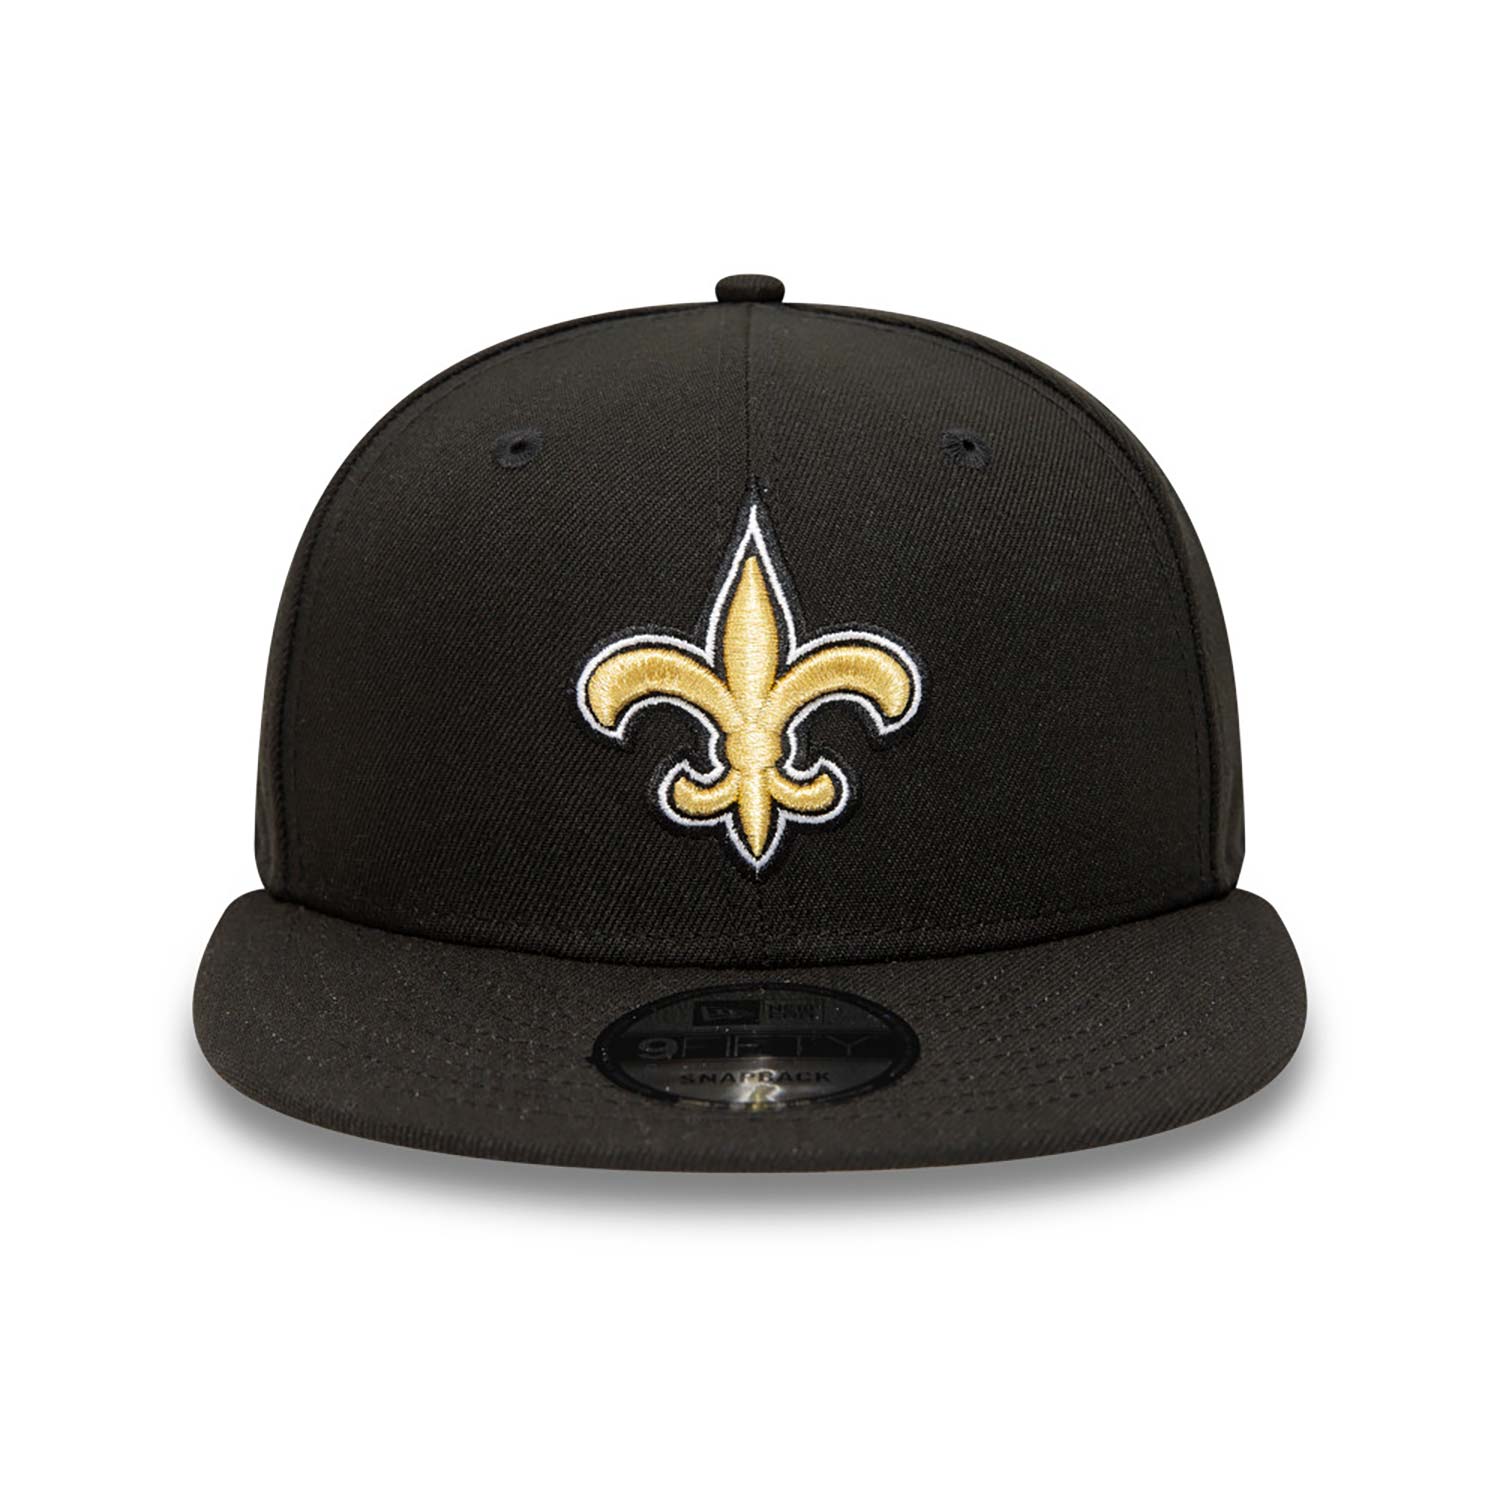 New Orleans Saints NFL Teams Black 9FIFTY Cap